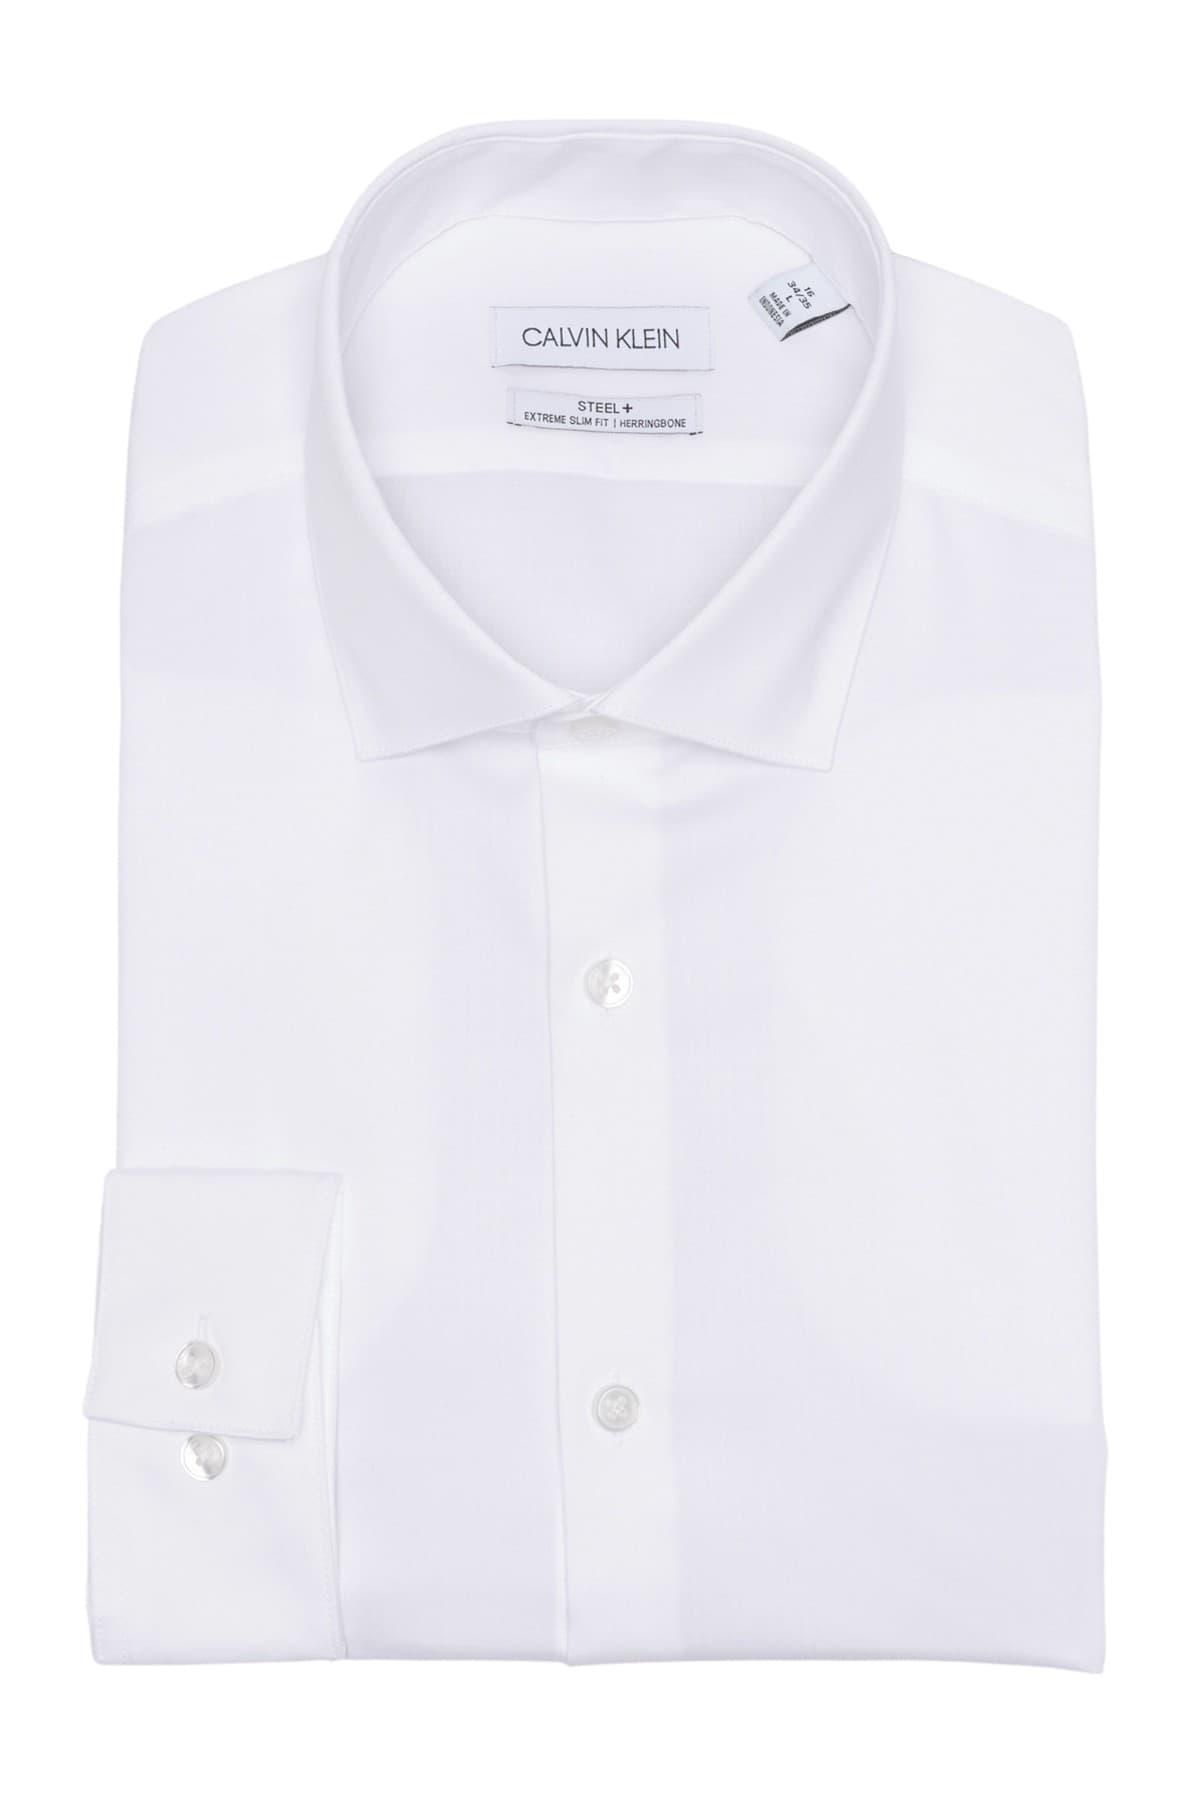 Calvin Klein Cotton Steel Extra-slim Fit Non-iron Performance Herringbone Dress  Shirt in White for Men - Save 67% | Lyst